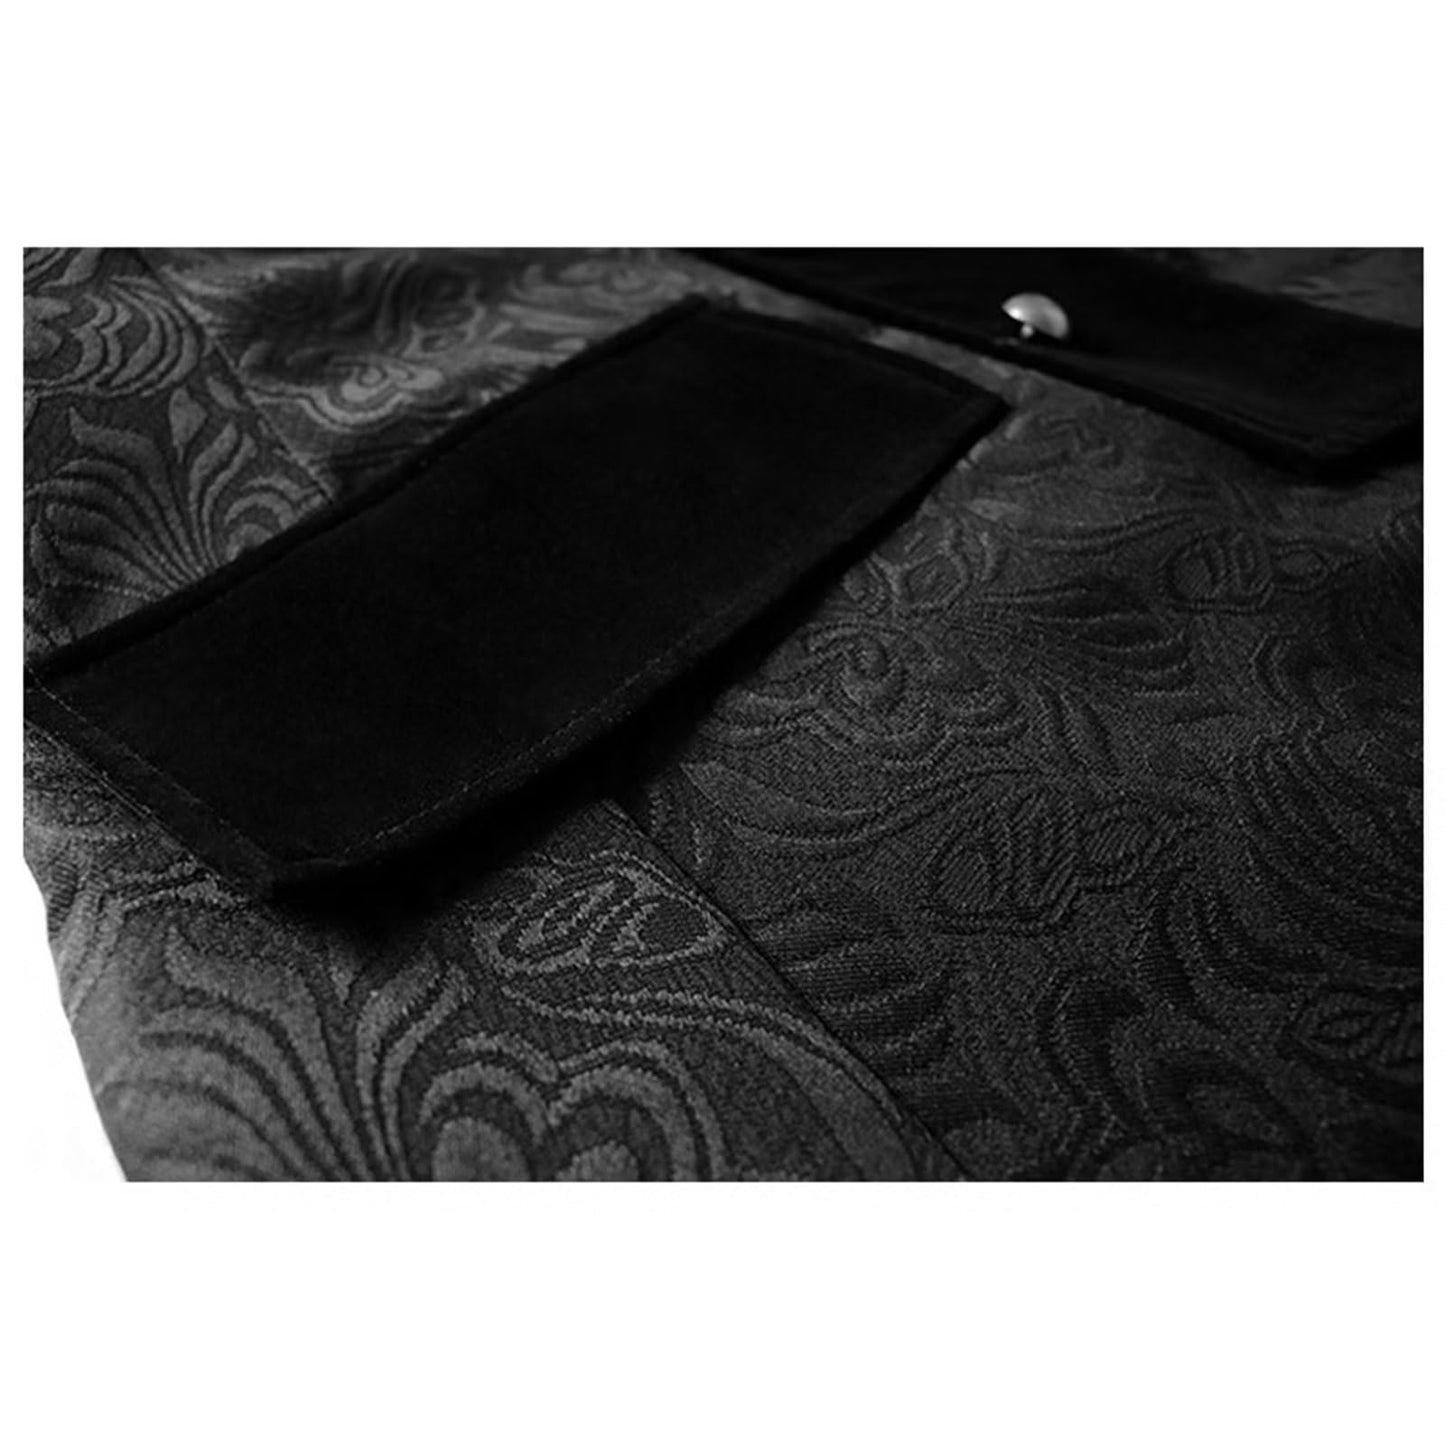 YUAKOU Fashion Men's Gothic Tailcoat Steampunk Victorian Jacket Uniform Velvet Collar Jacquard Man Coat Costume